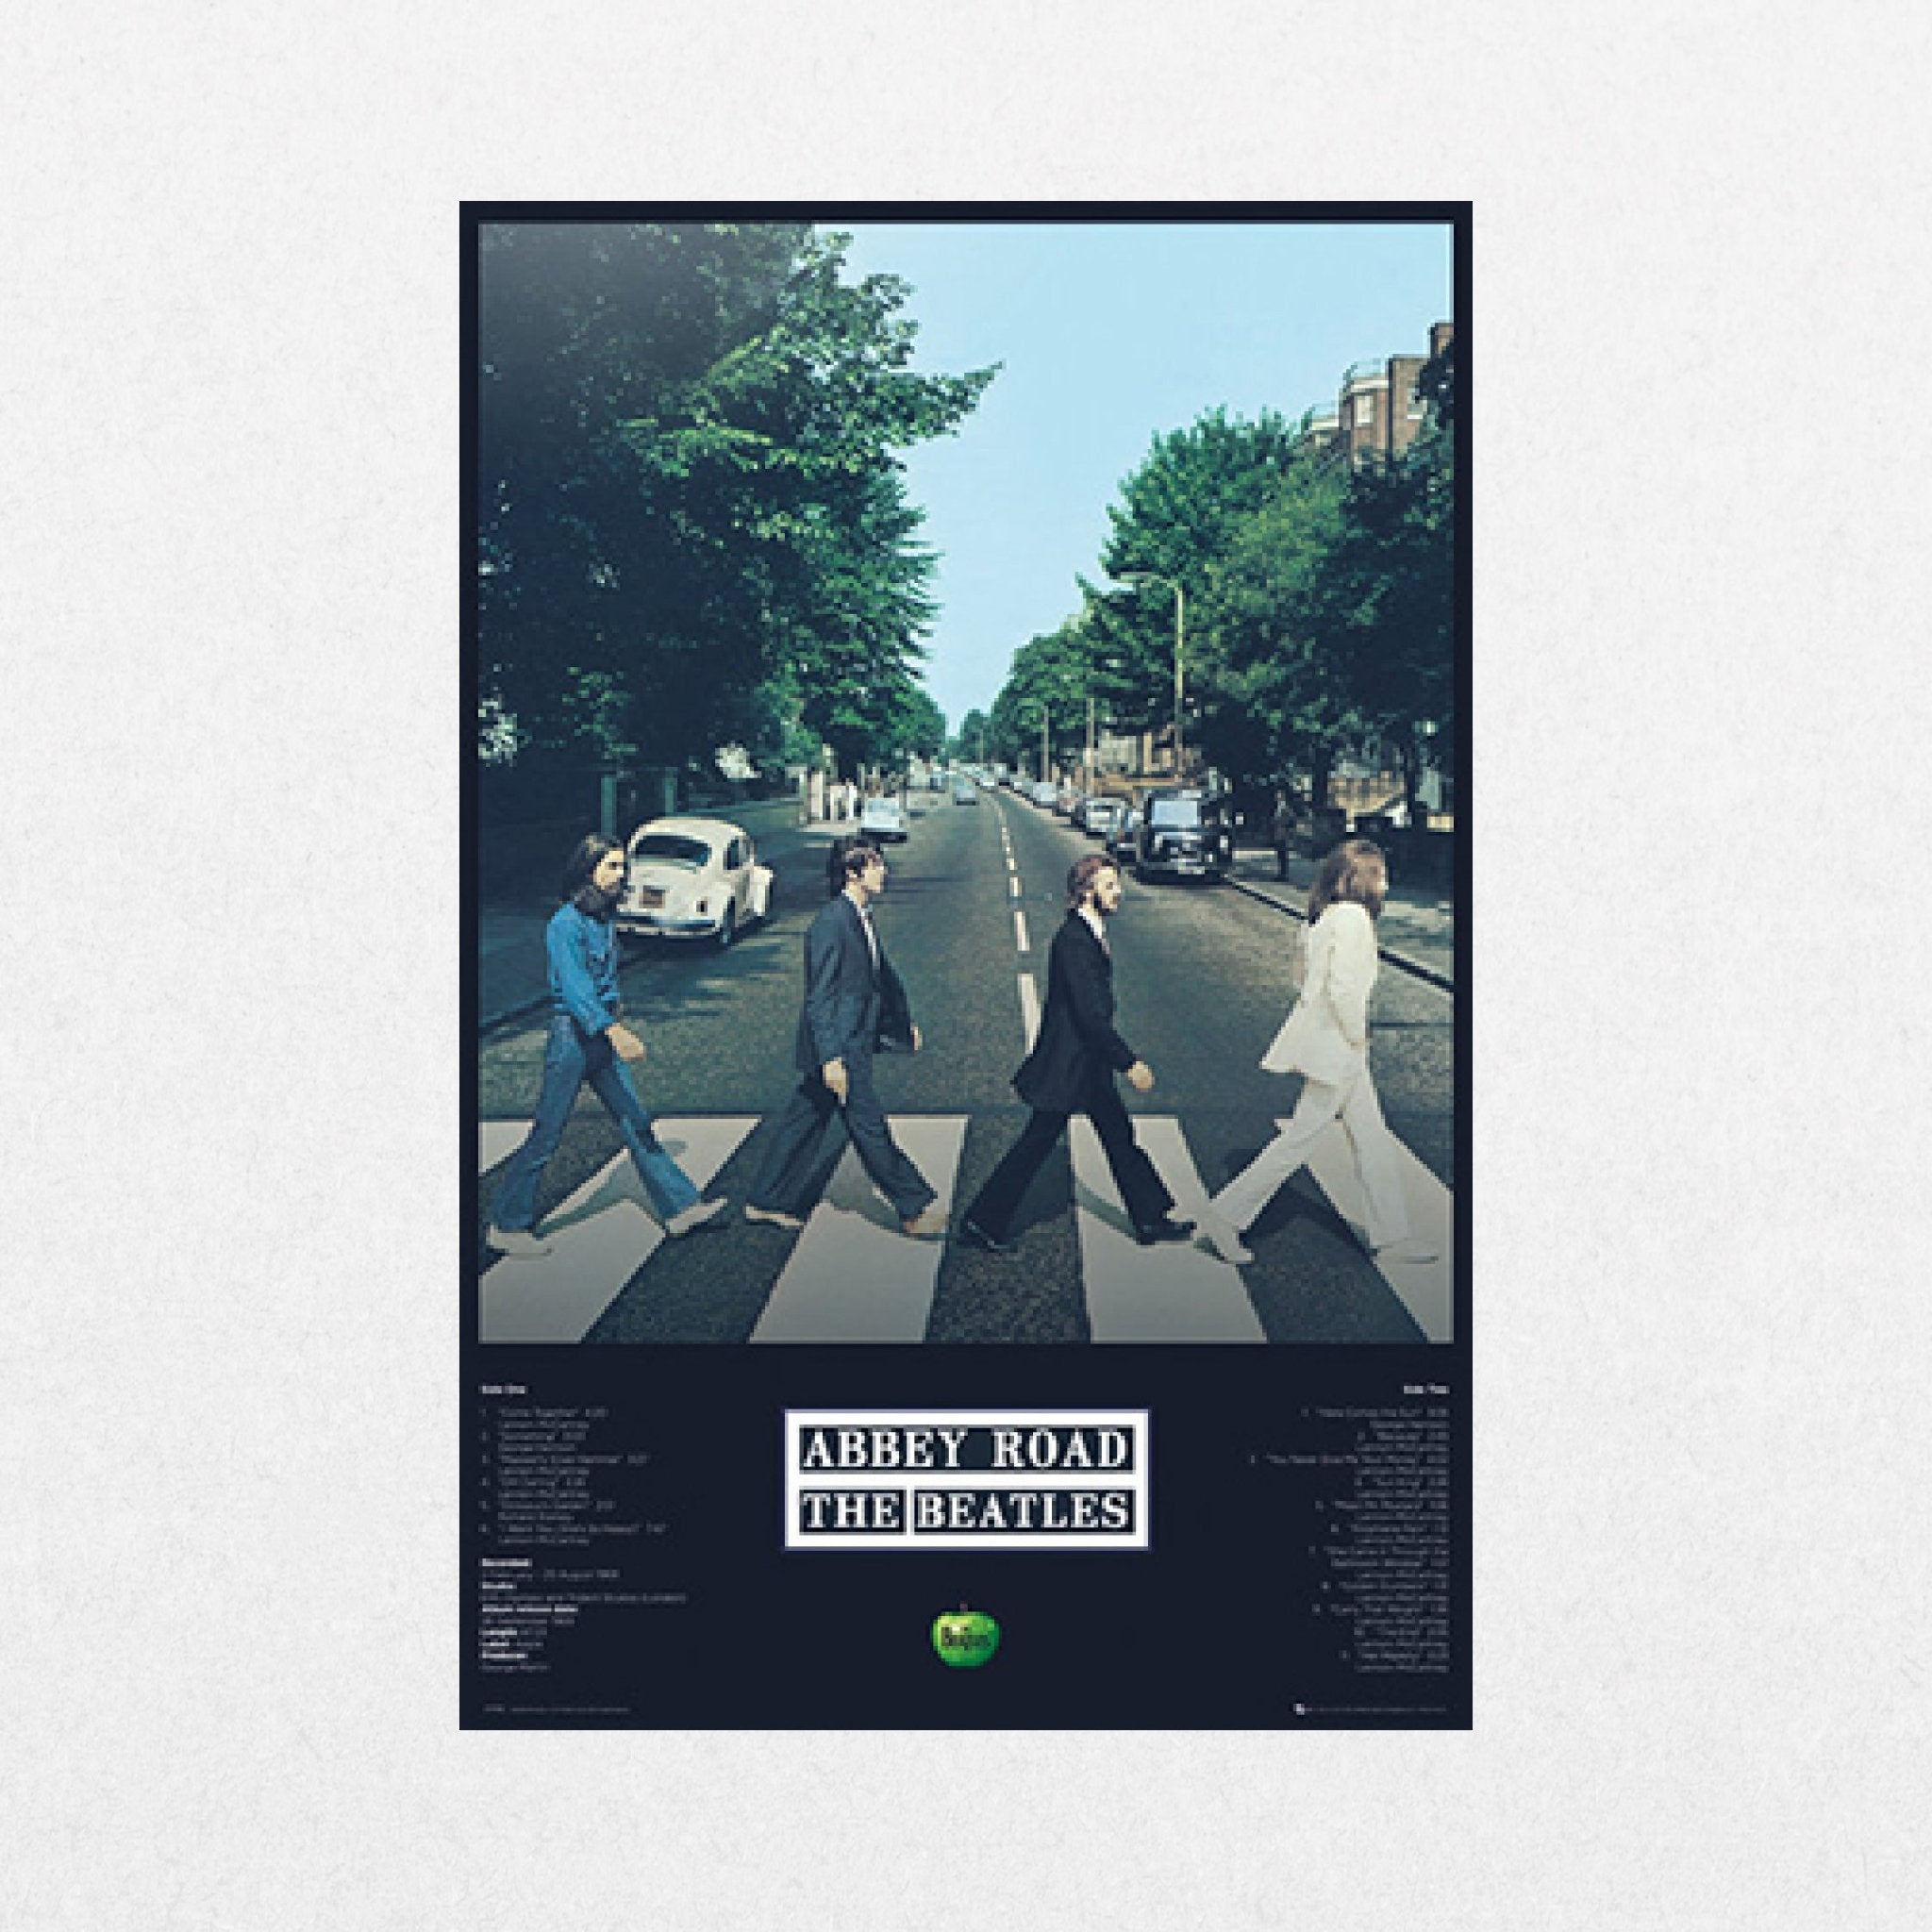 The Beatles - Abbey Road Tracks - El Cartel